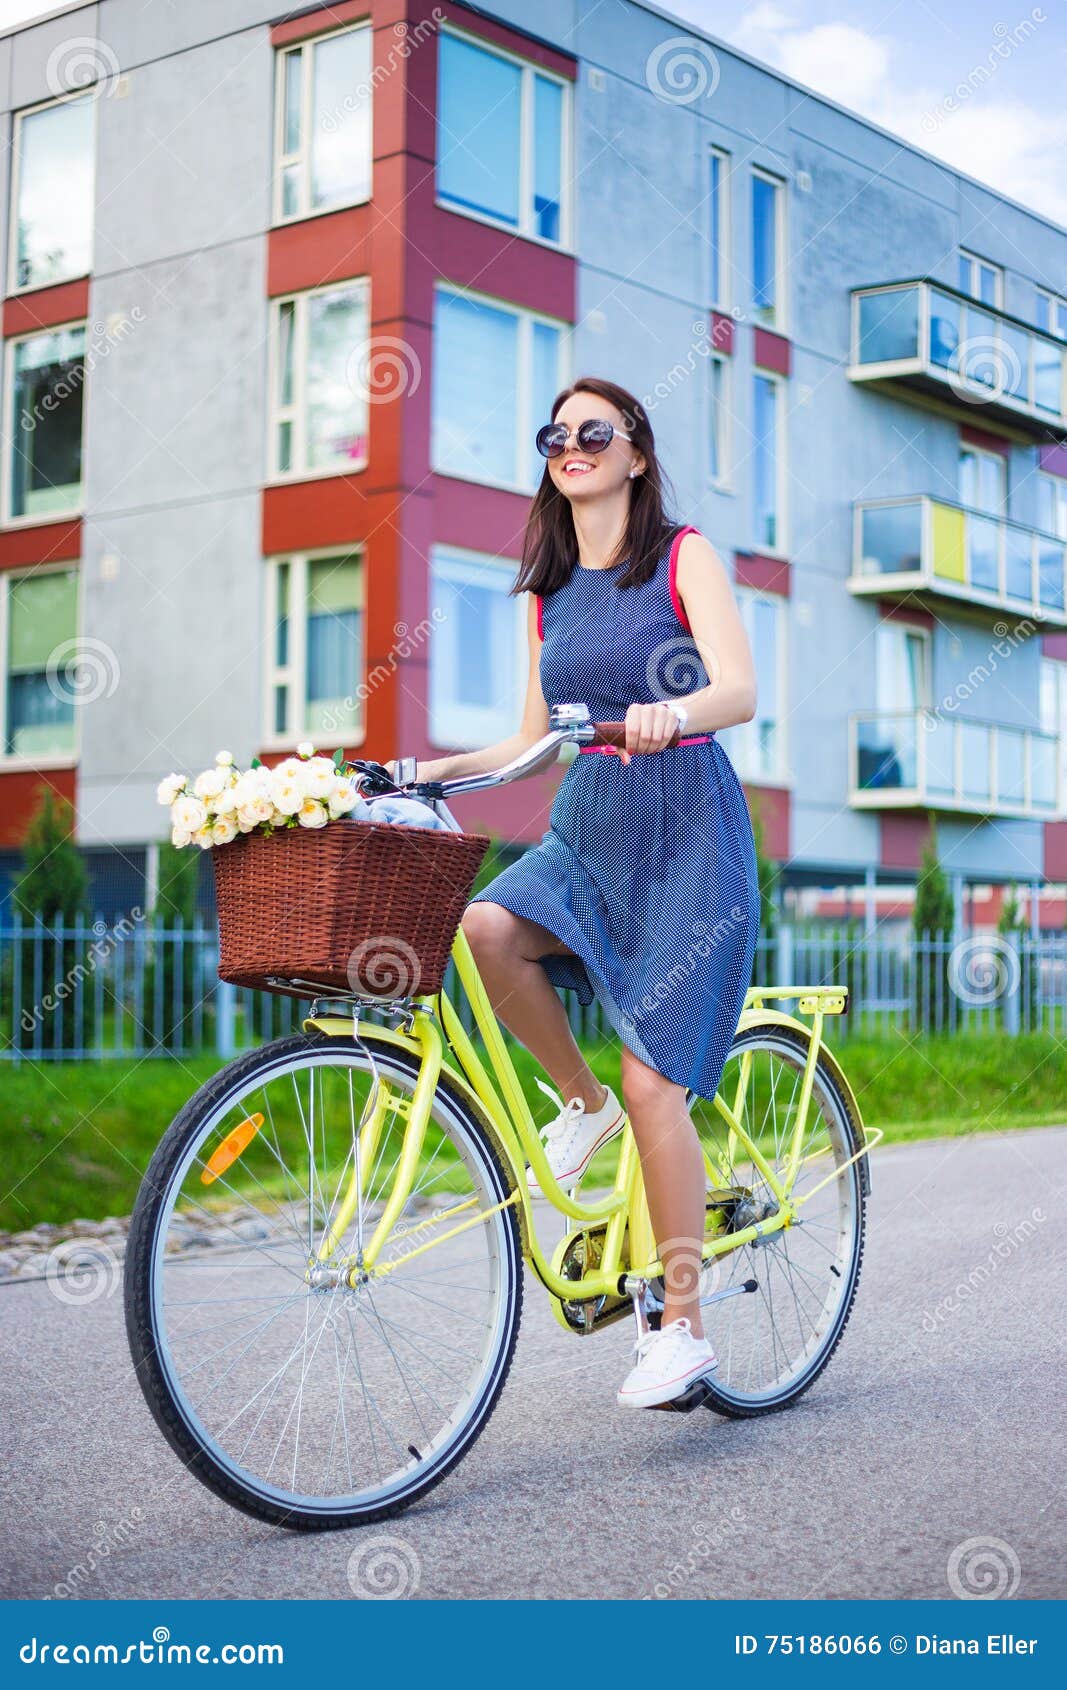 Teen Girl Riding Bike On Street Road Stock Photo 